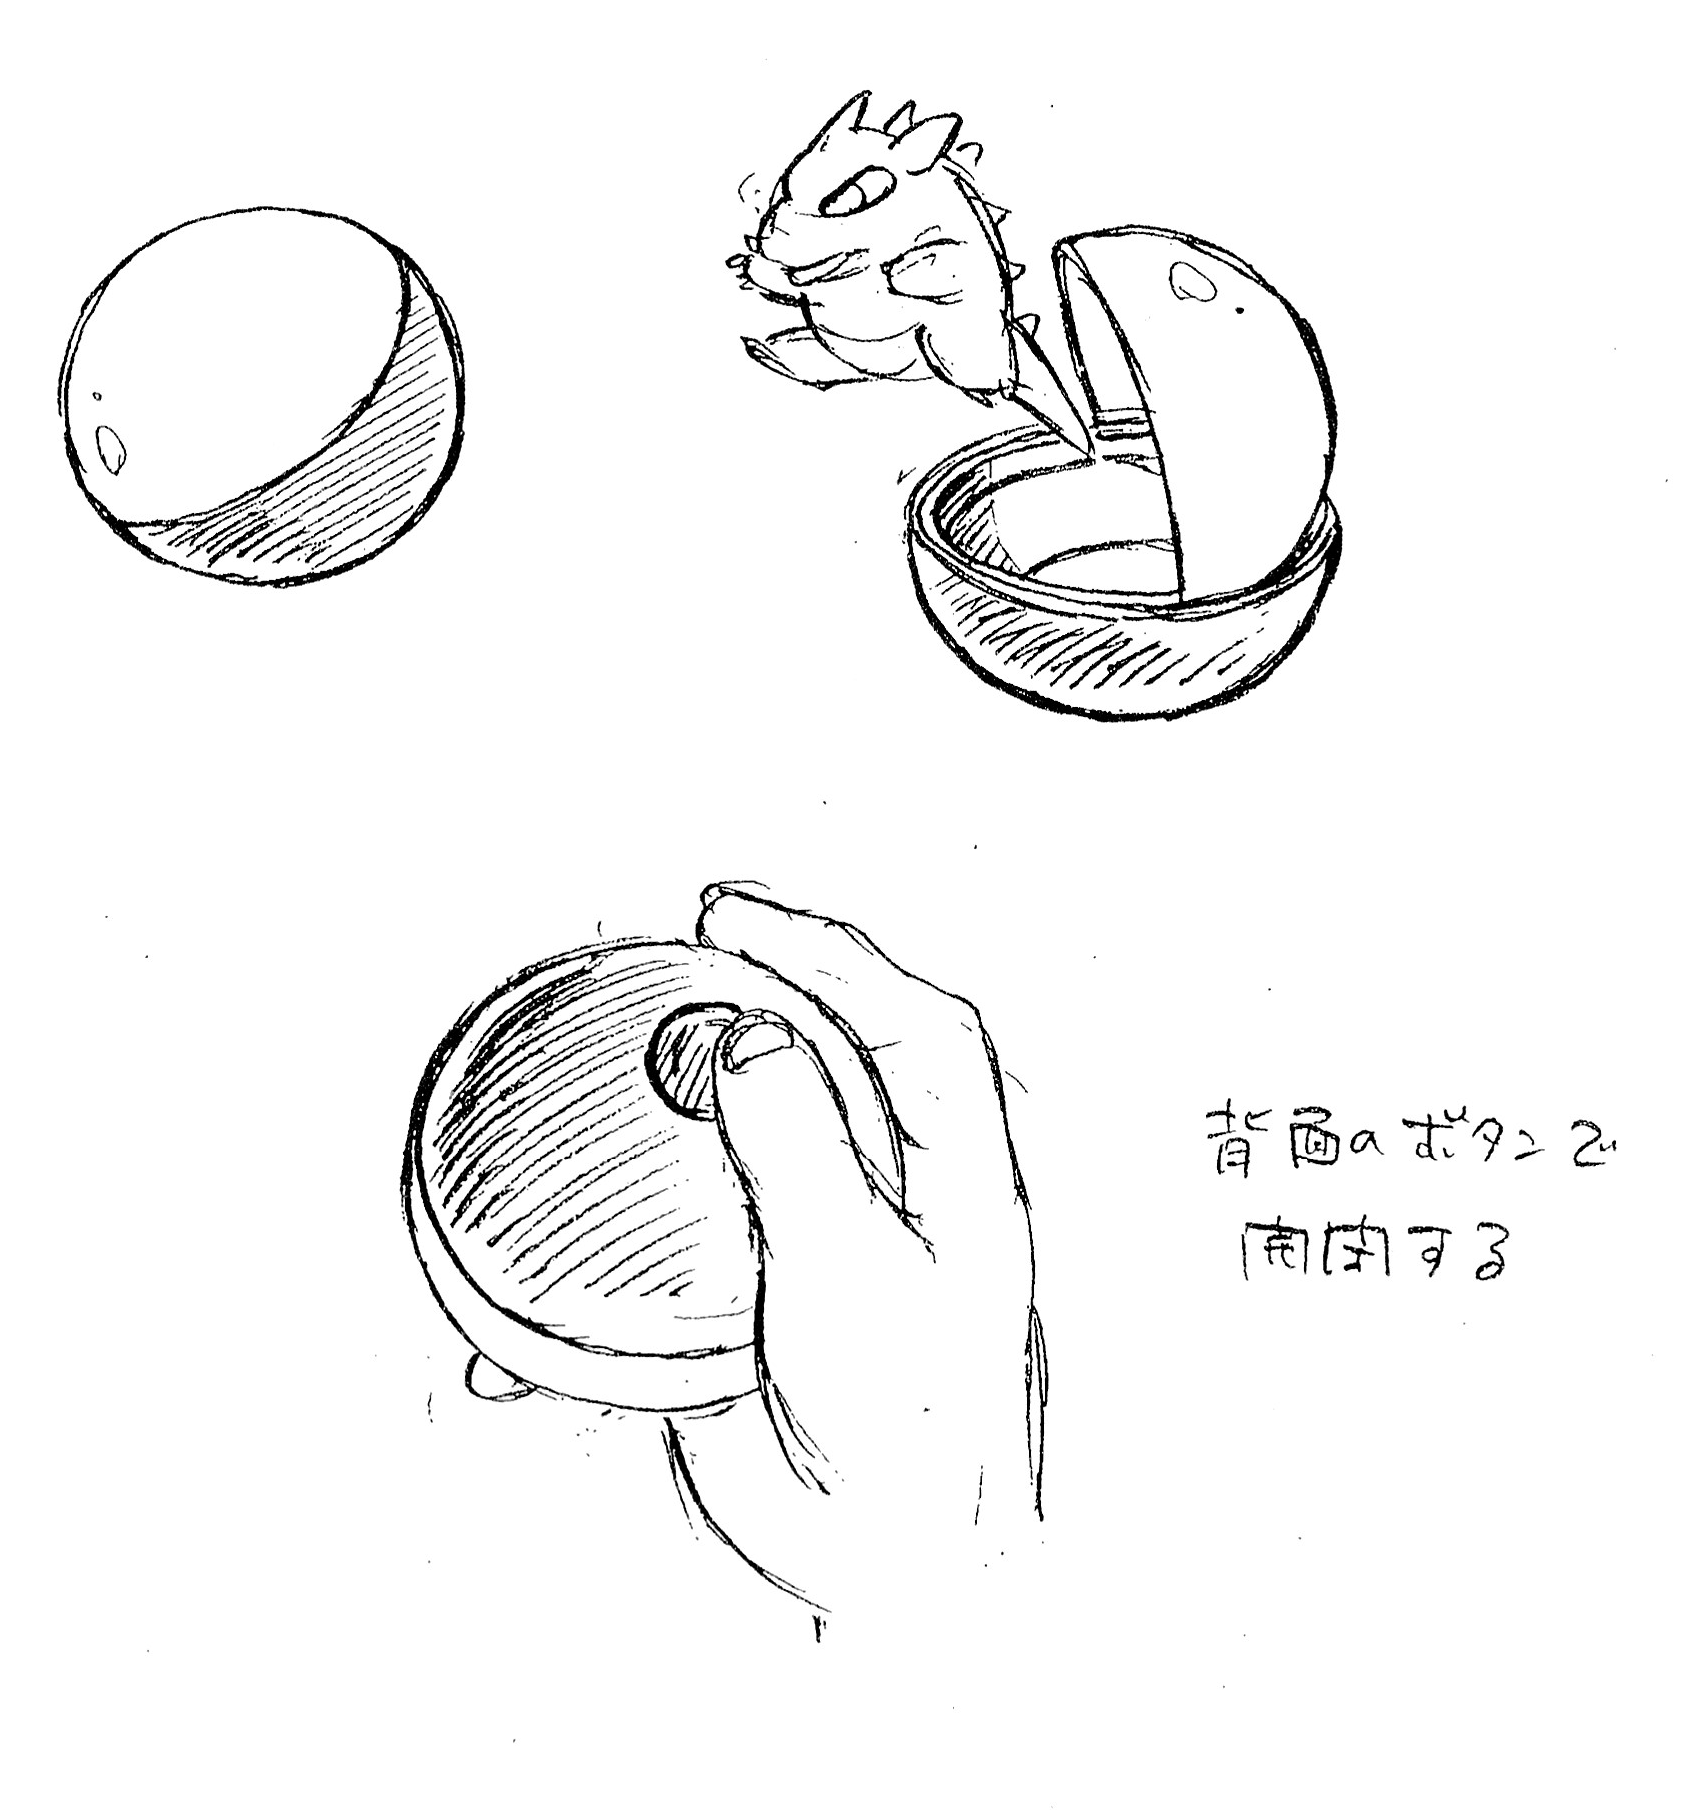 voltorb and electrode (pokemon) drawn by sekori